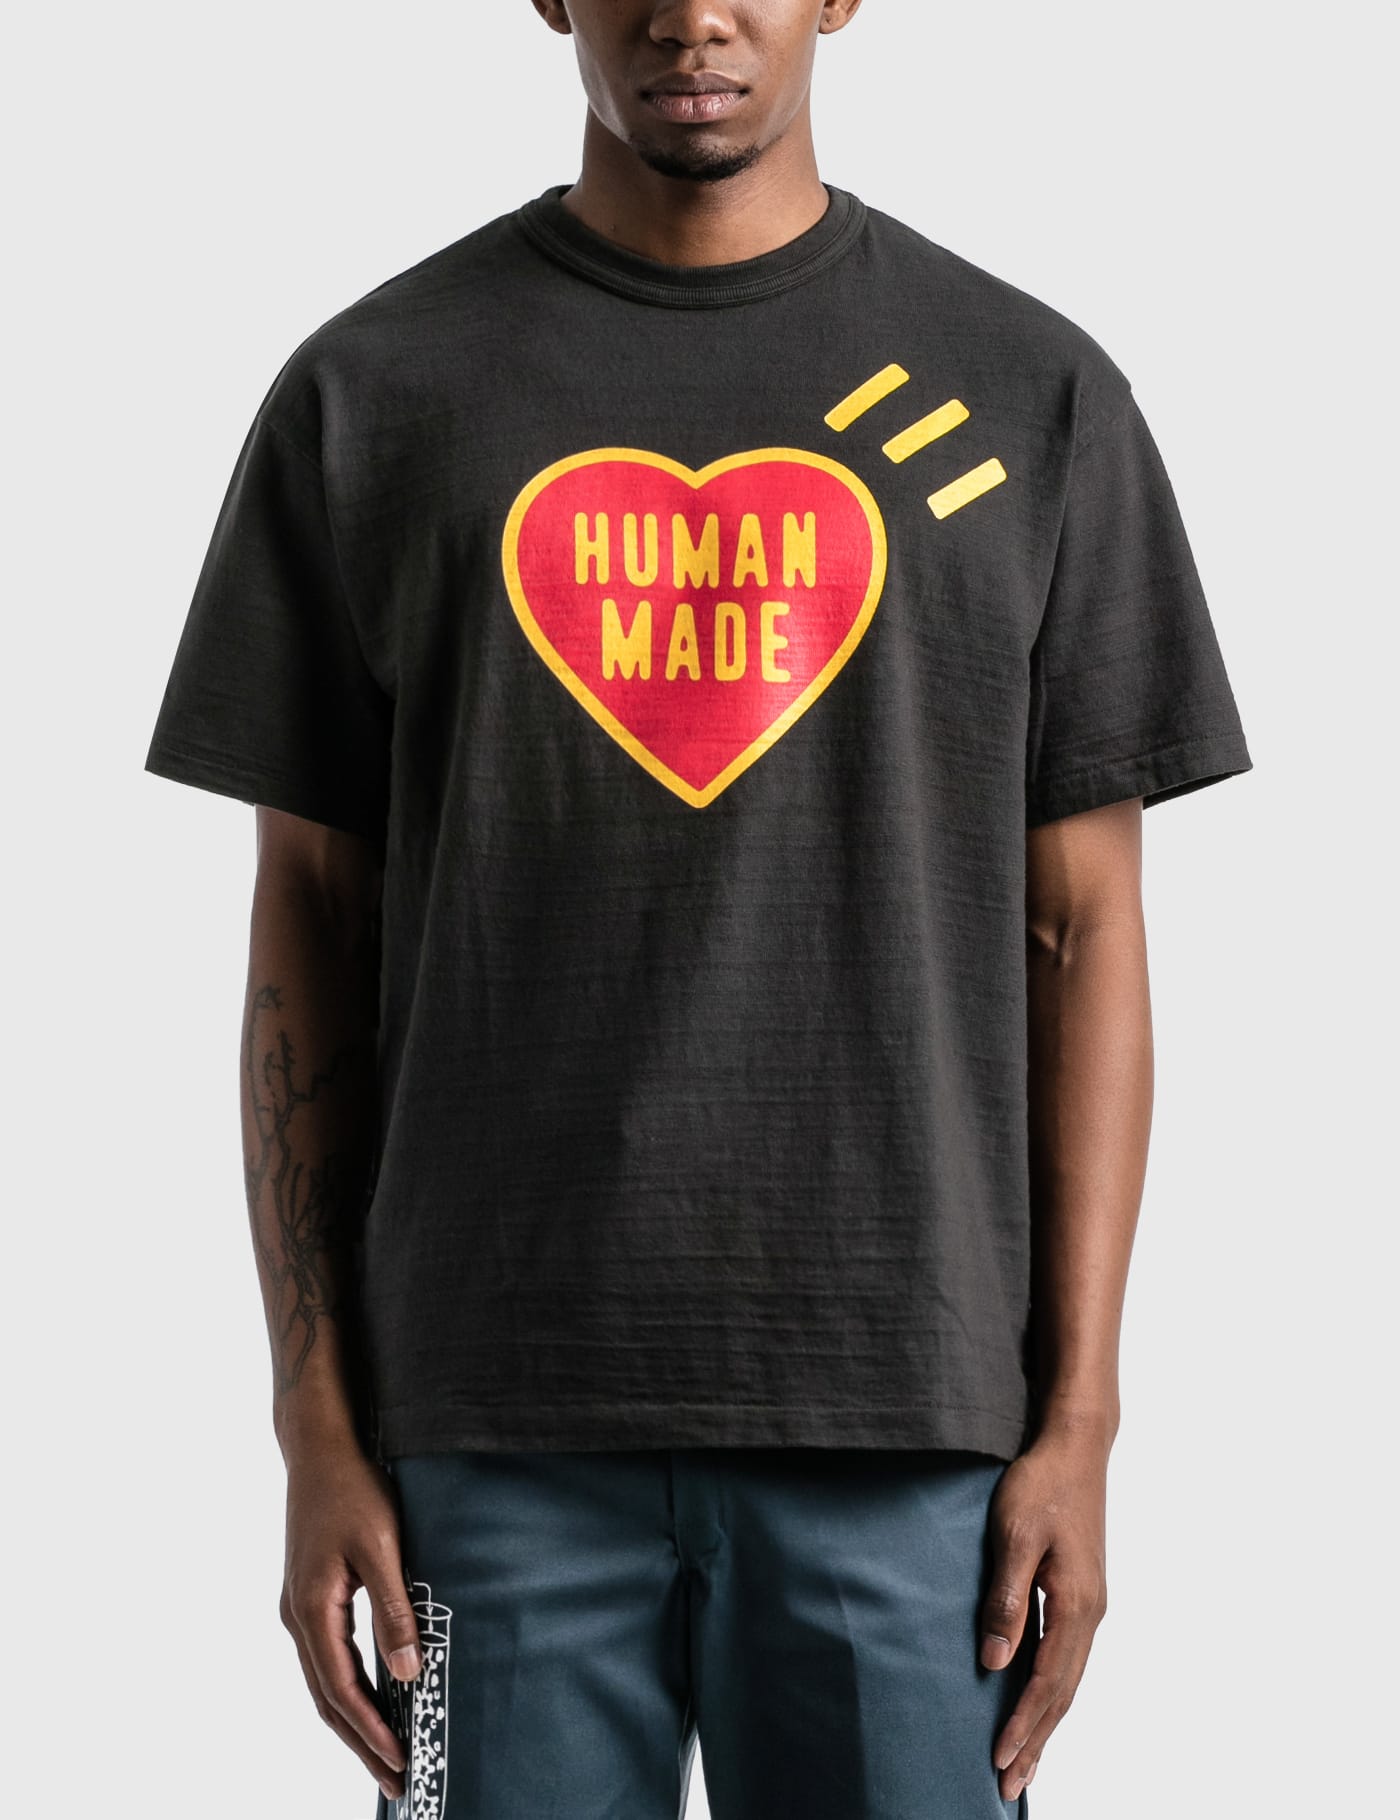 Human Made - T-shirt #2026 | HBX - HYPEBEAST 為您搜羅全球潮流時尚品牌